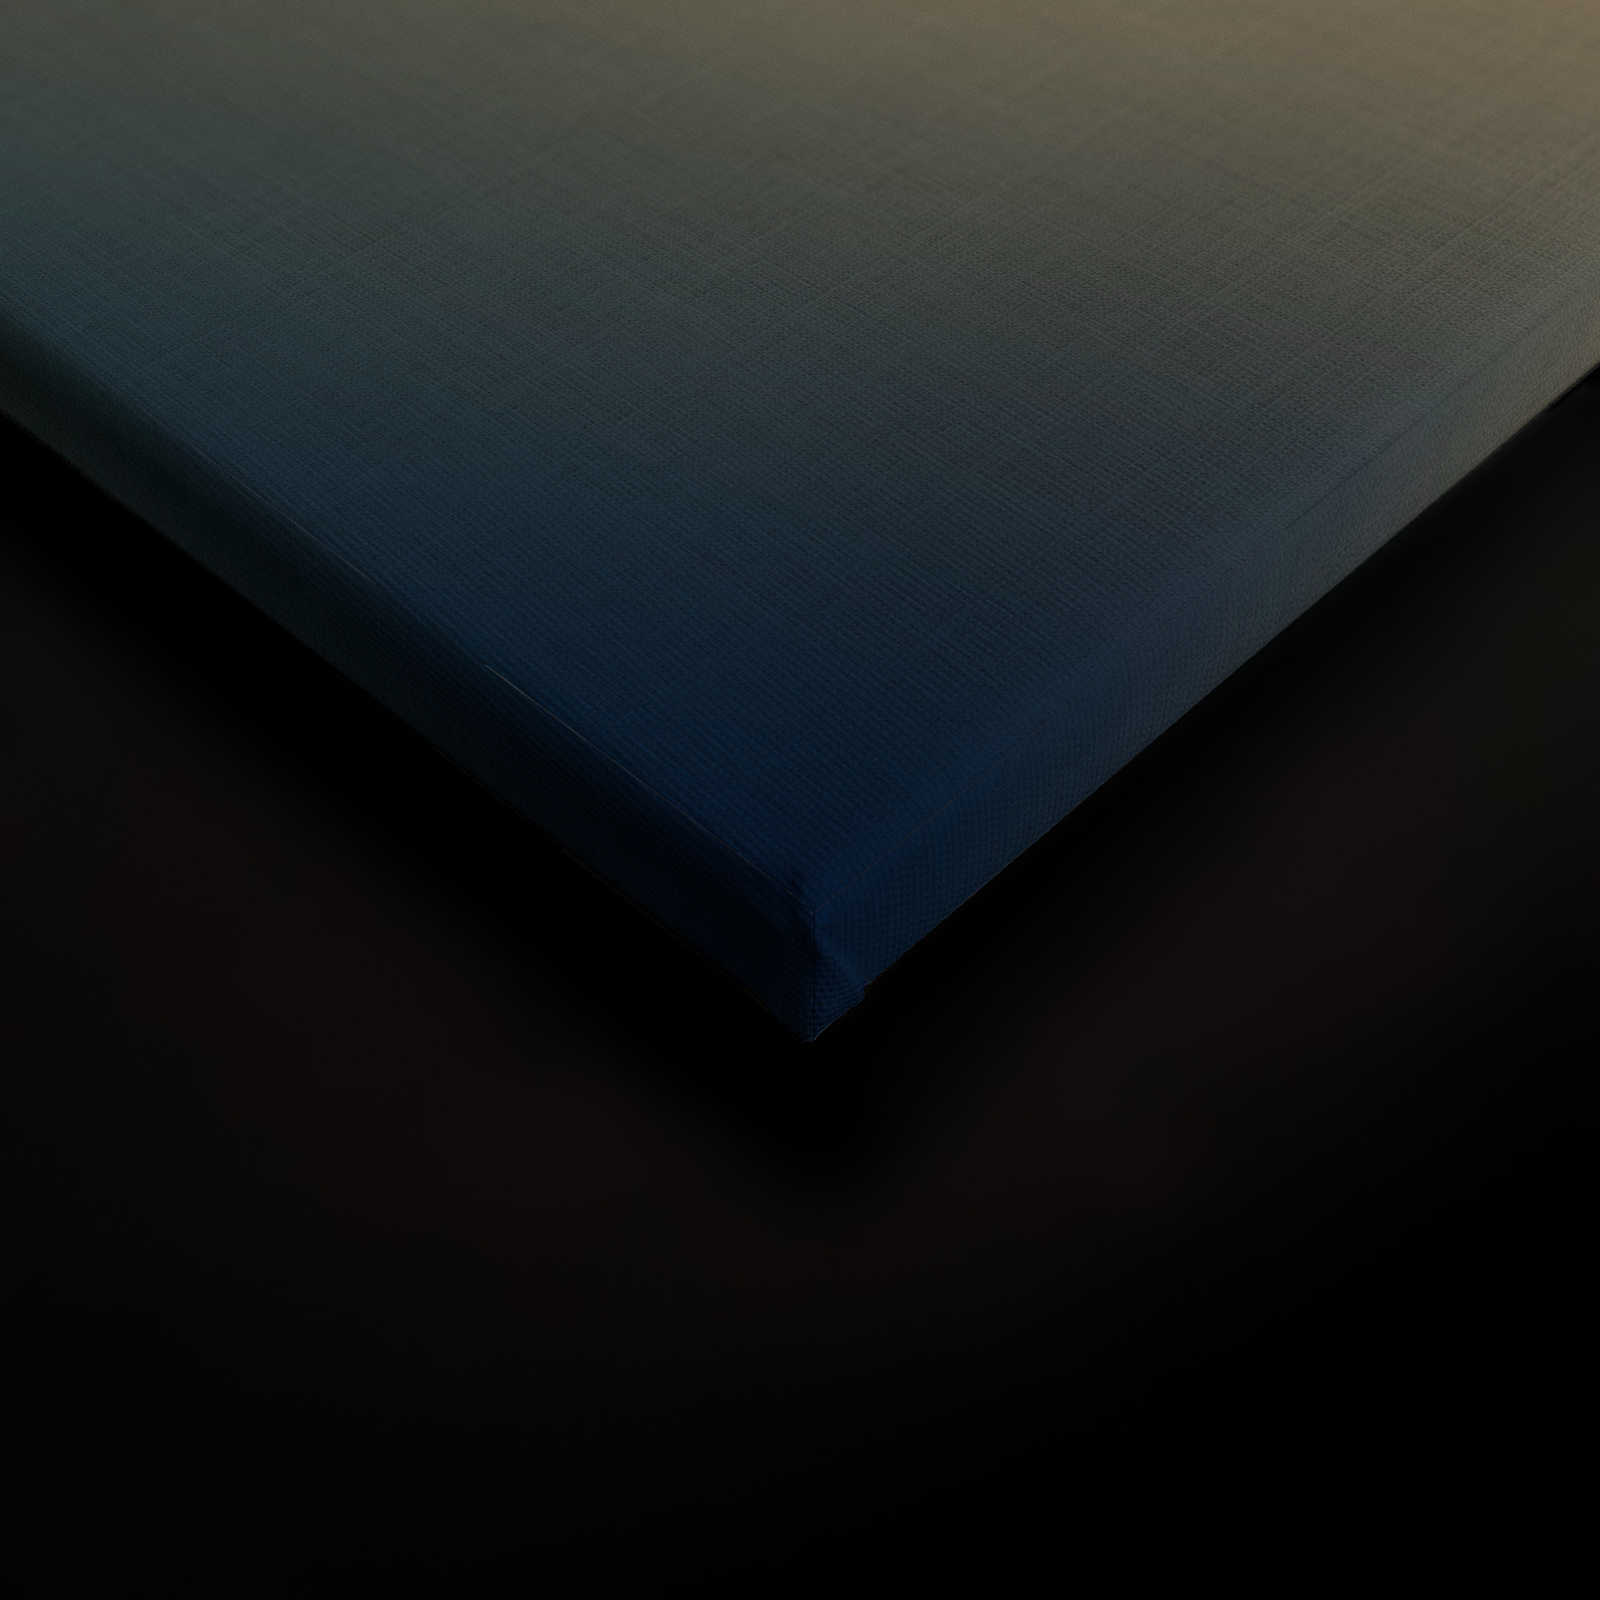             La bohème 2 - Cuadro en lienzo de aspecto bohemio en tonos beige - estructura lino natural - 0,90 m x 0,60 m
        